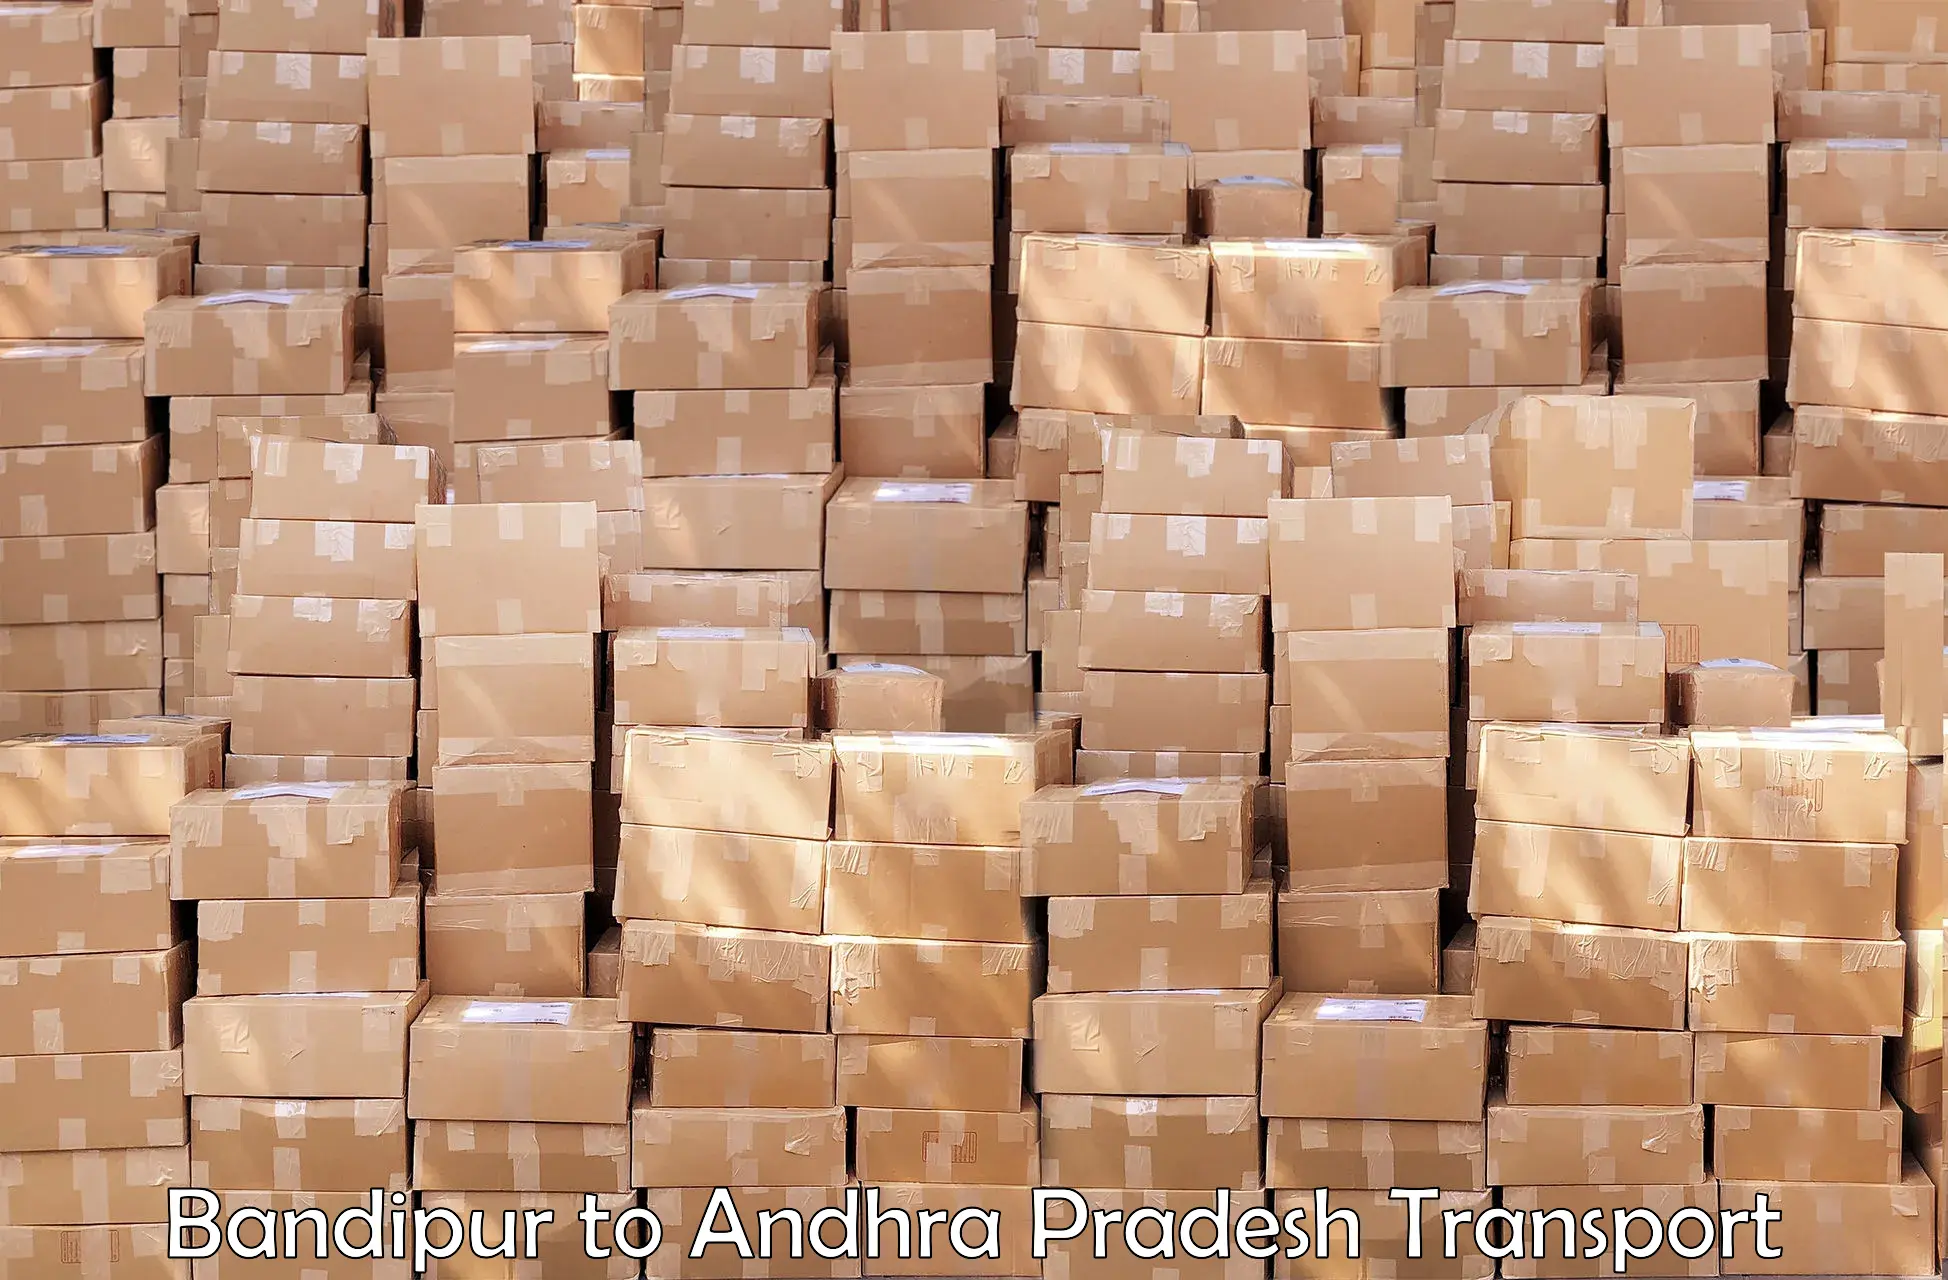 Daily parcel service transport Bandipur to Etcherla